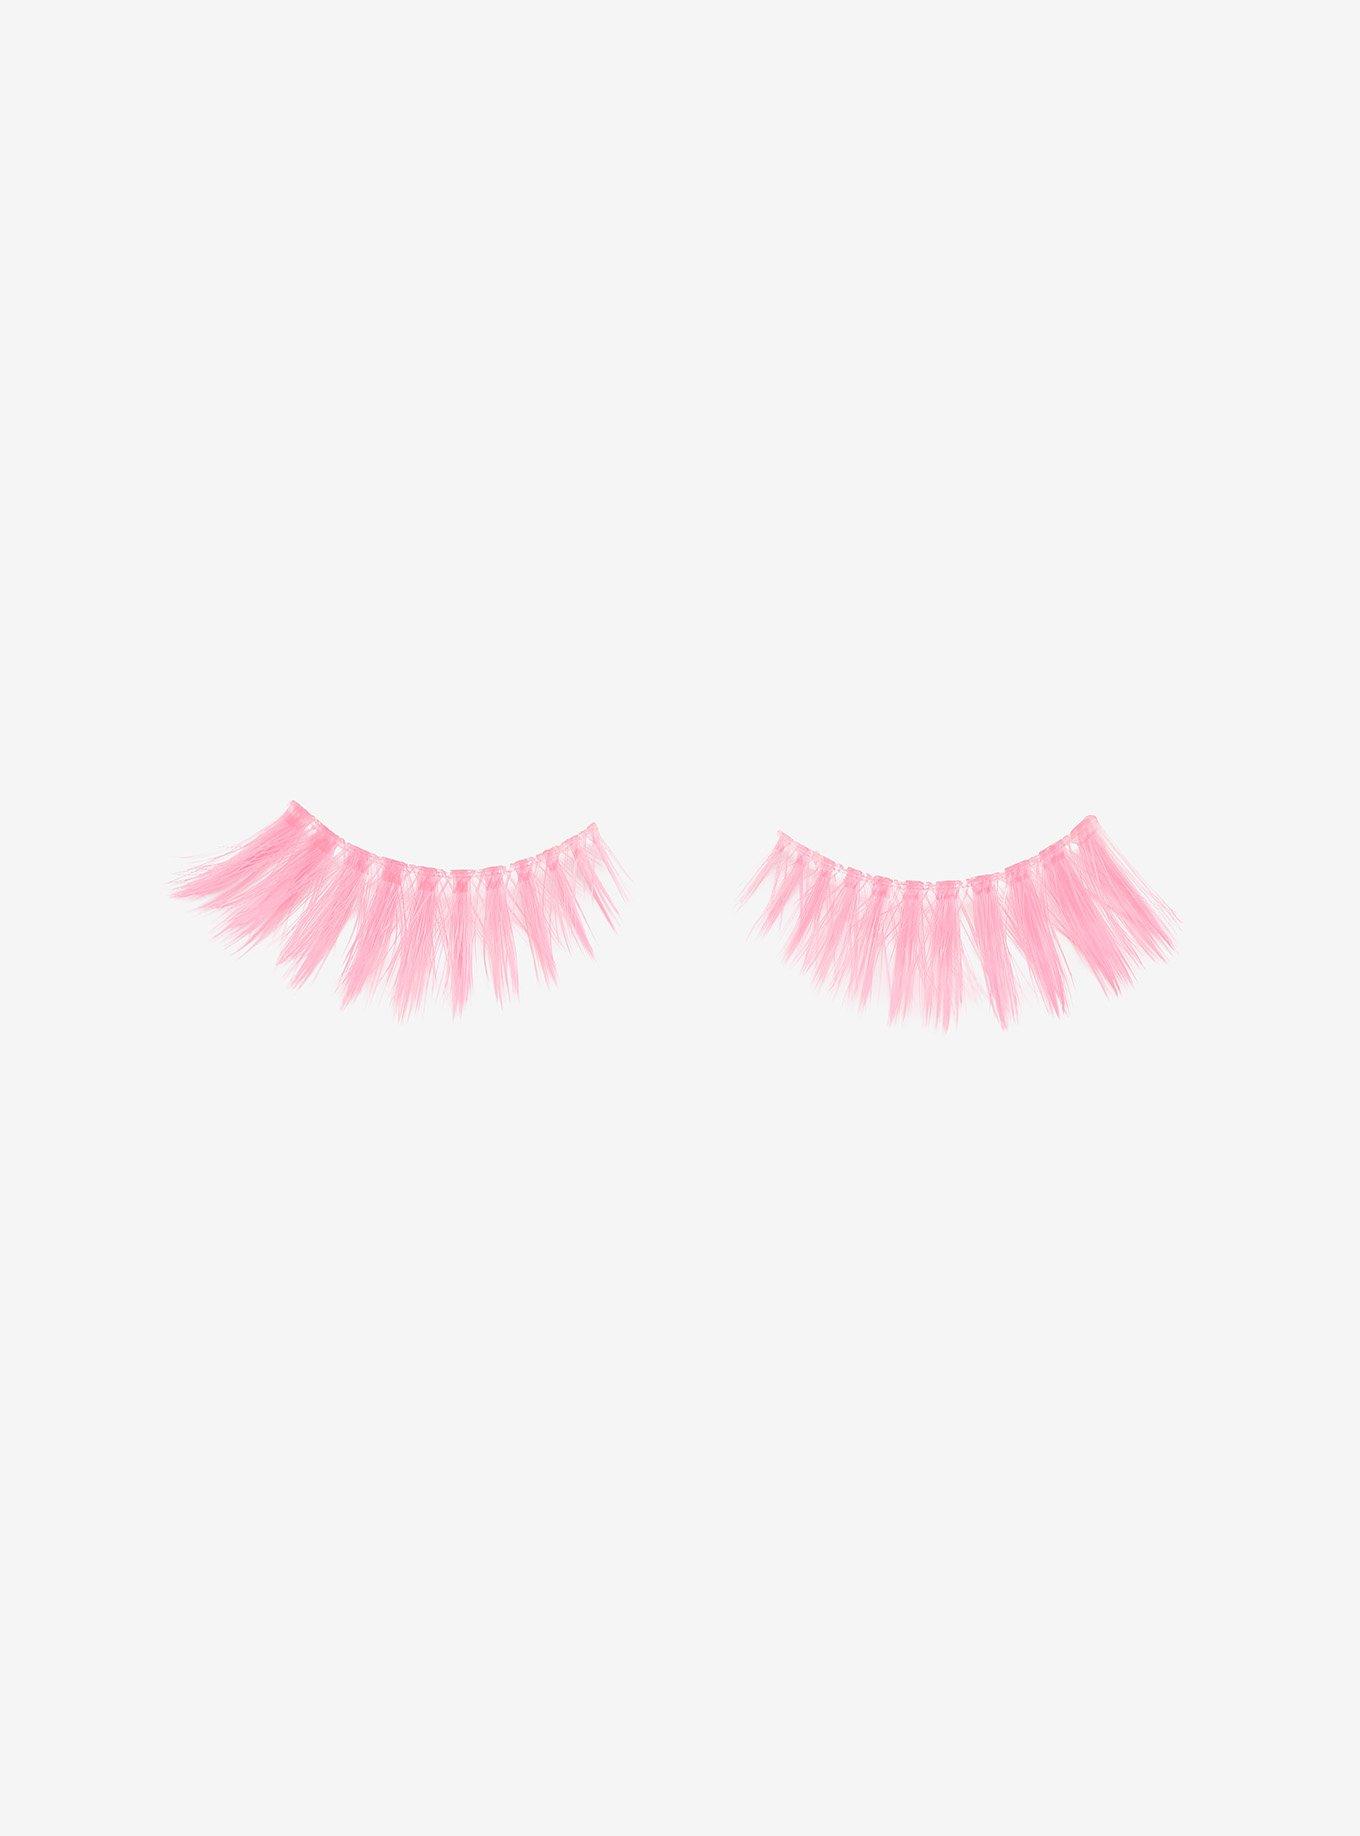 Kara Beauty Fabulashes Light Pink 3D Faux Mink Color Eyelashes, , hi-res